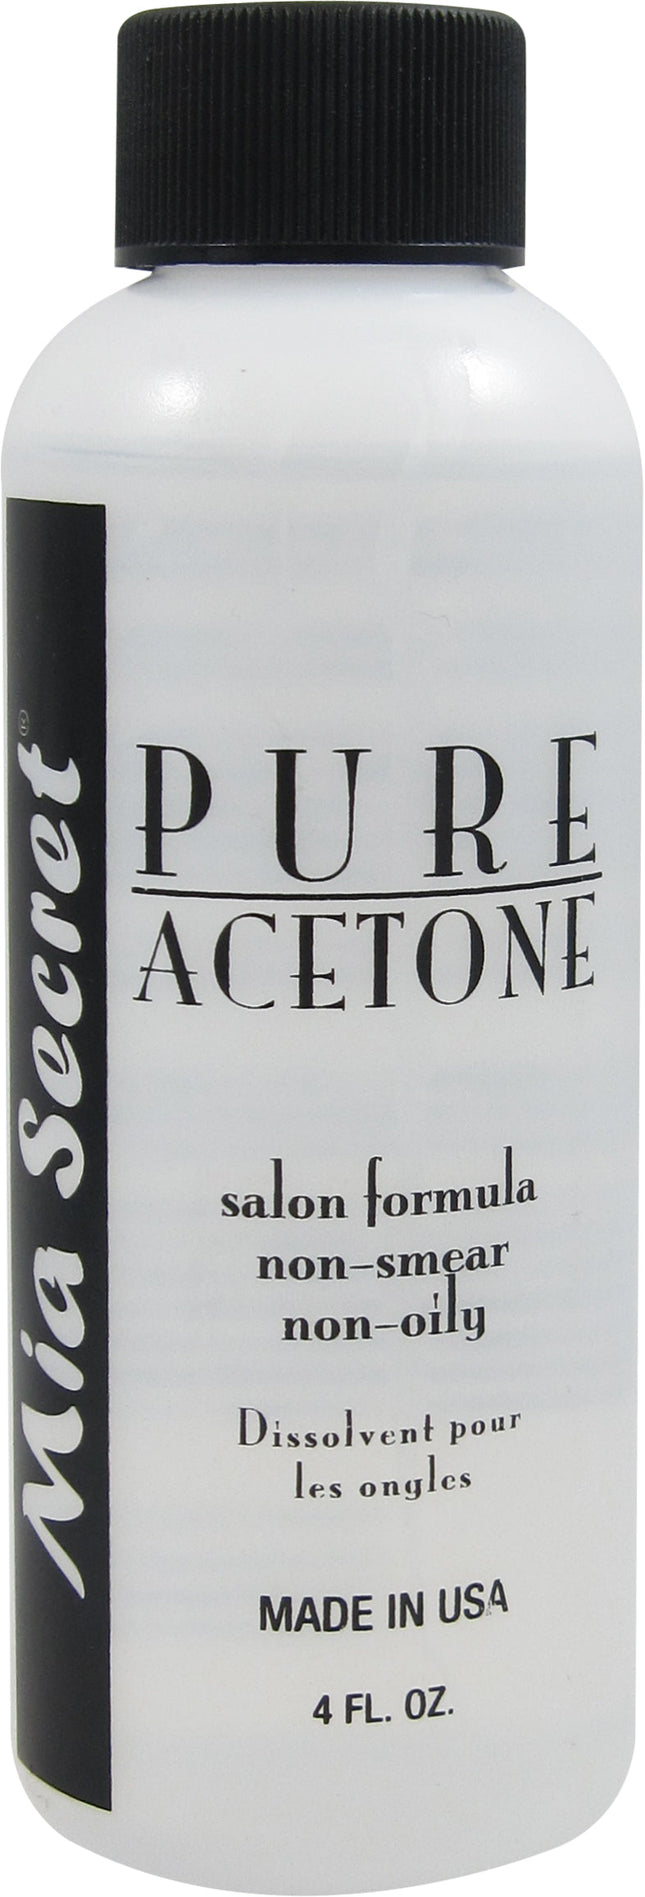 PURE Acetone